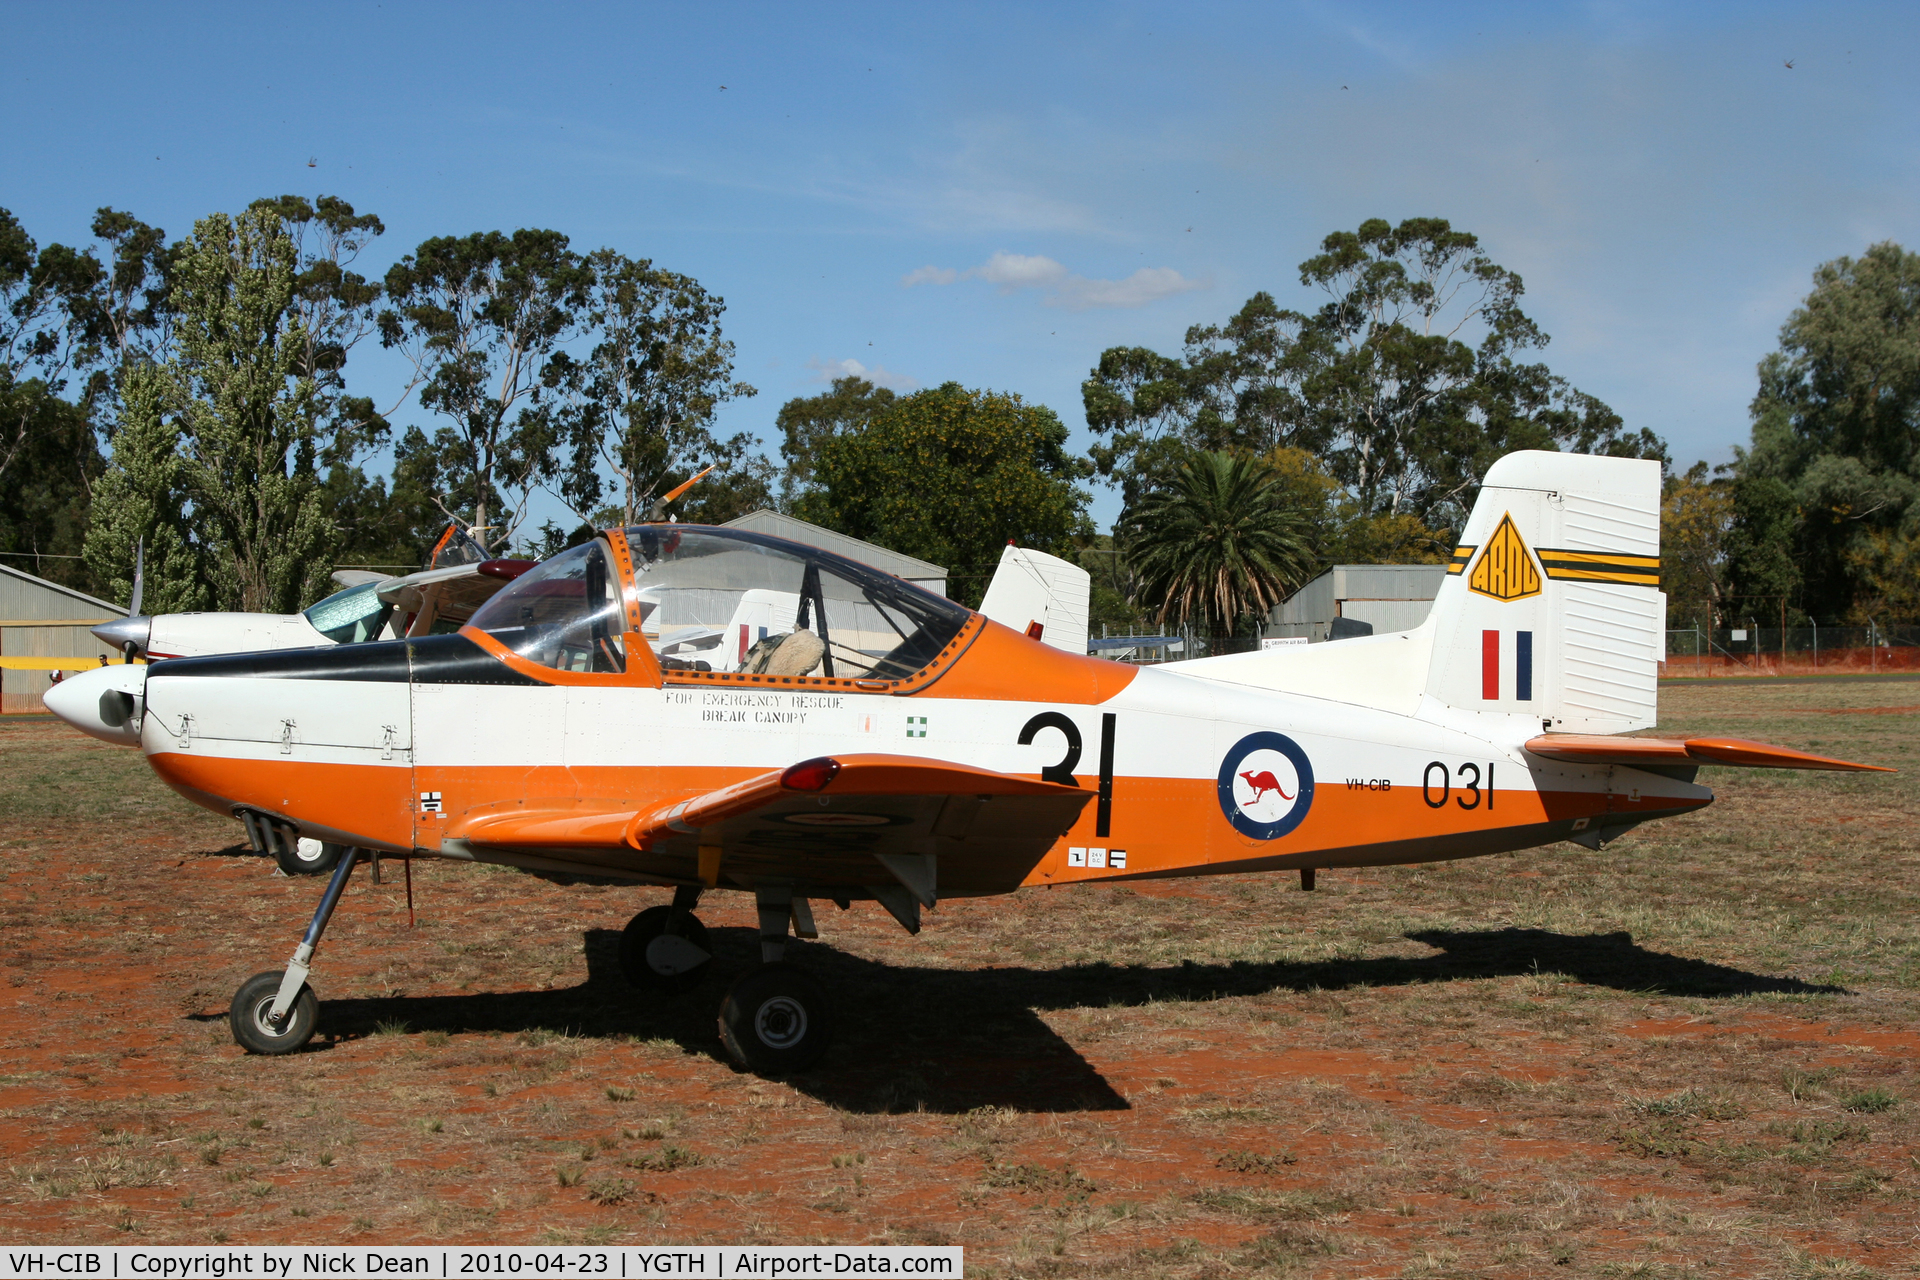 VH-CIB, 1977 New Zealand CT-4A Airtrainer C/N 031, YGTH